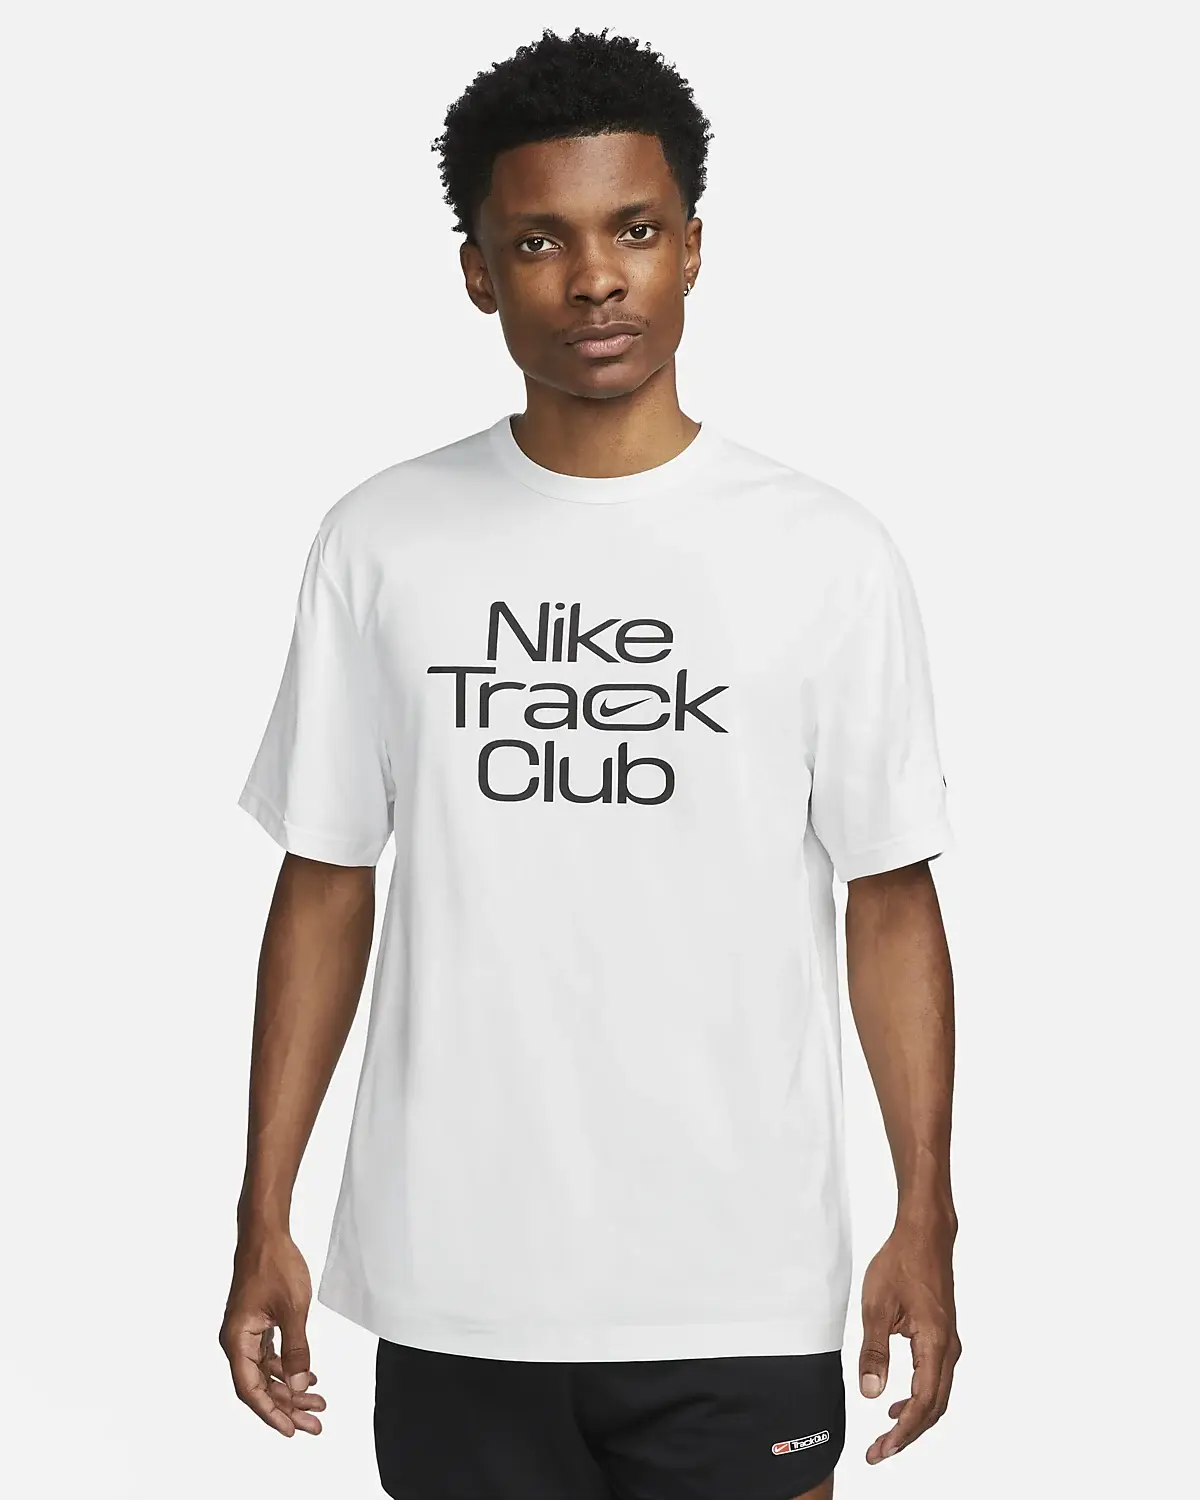 Nike Track Club. 1